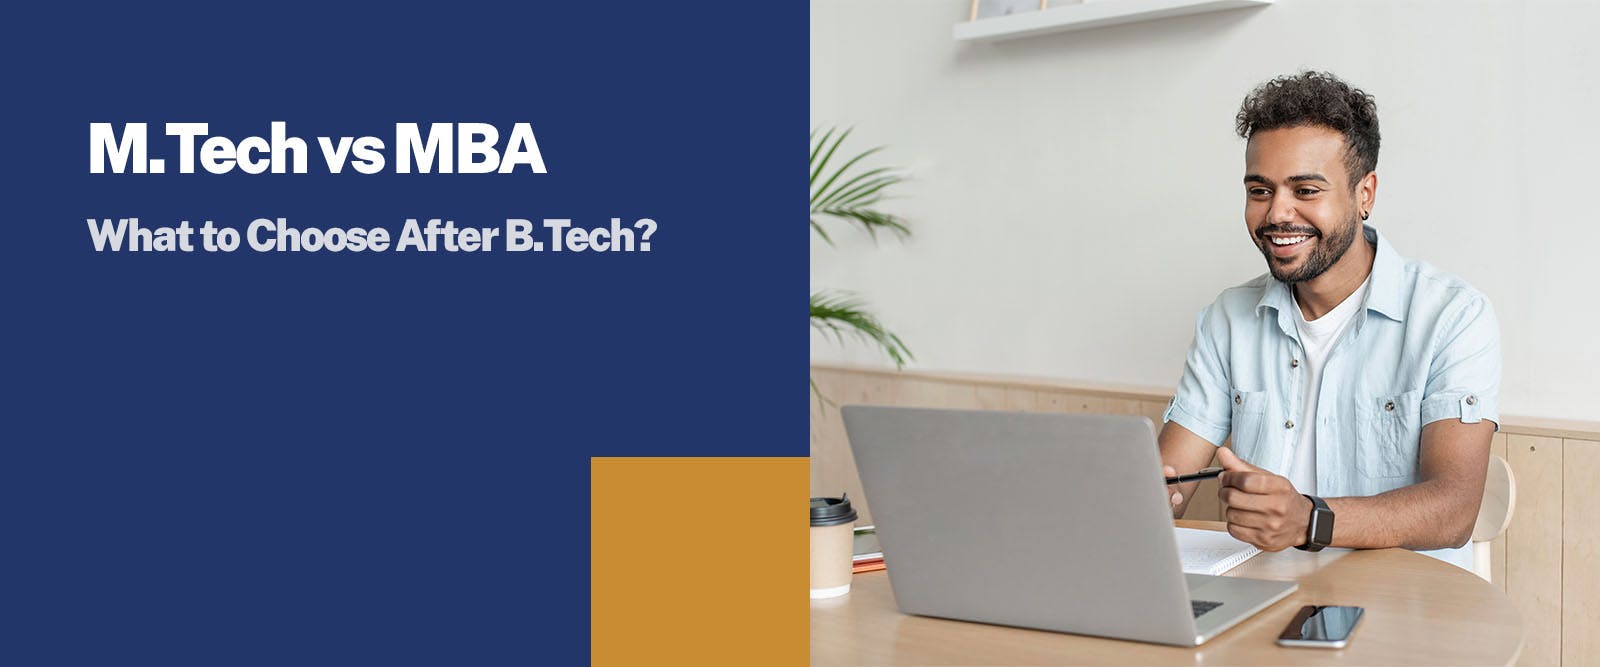 M.Tech vs MBA: What to Choose After B.Tech?